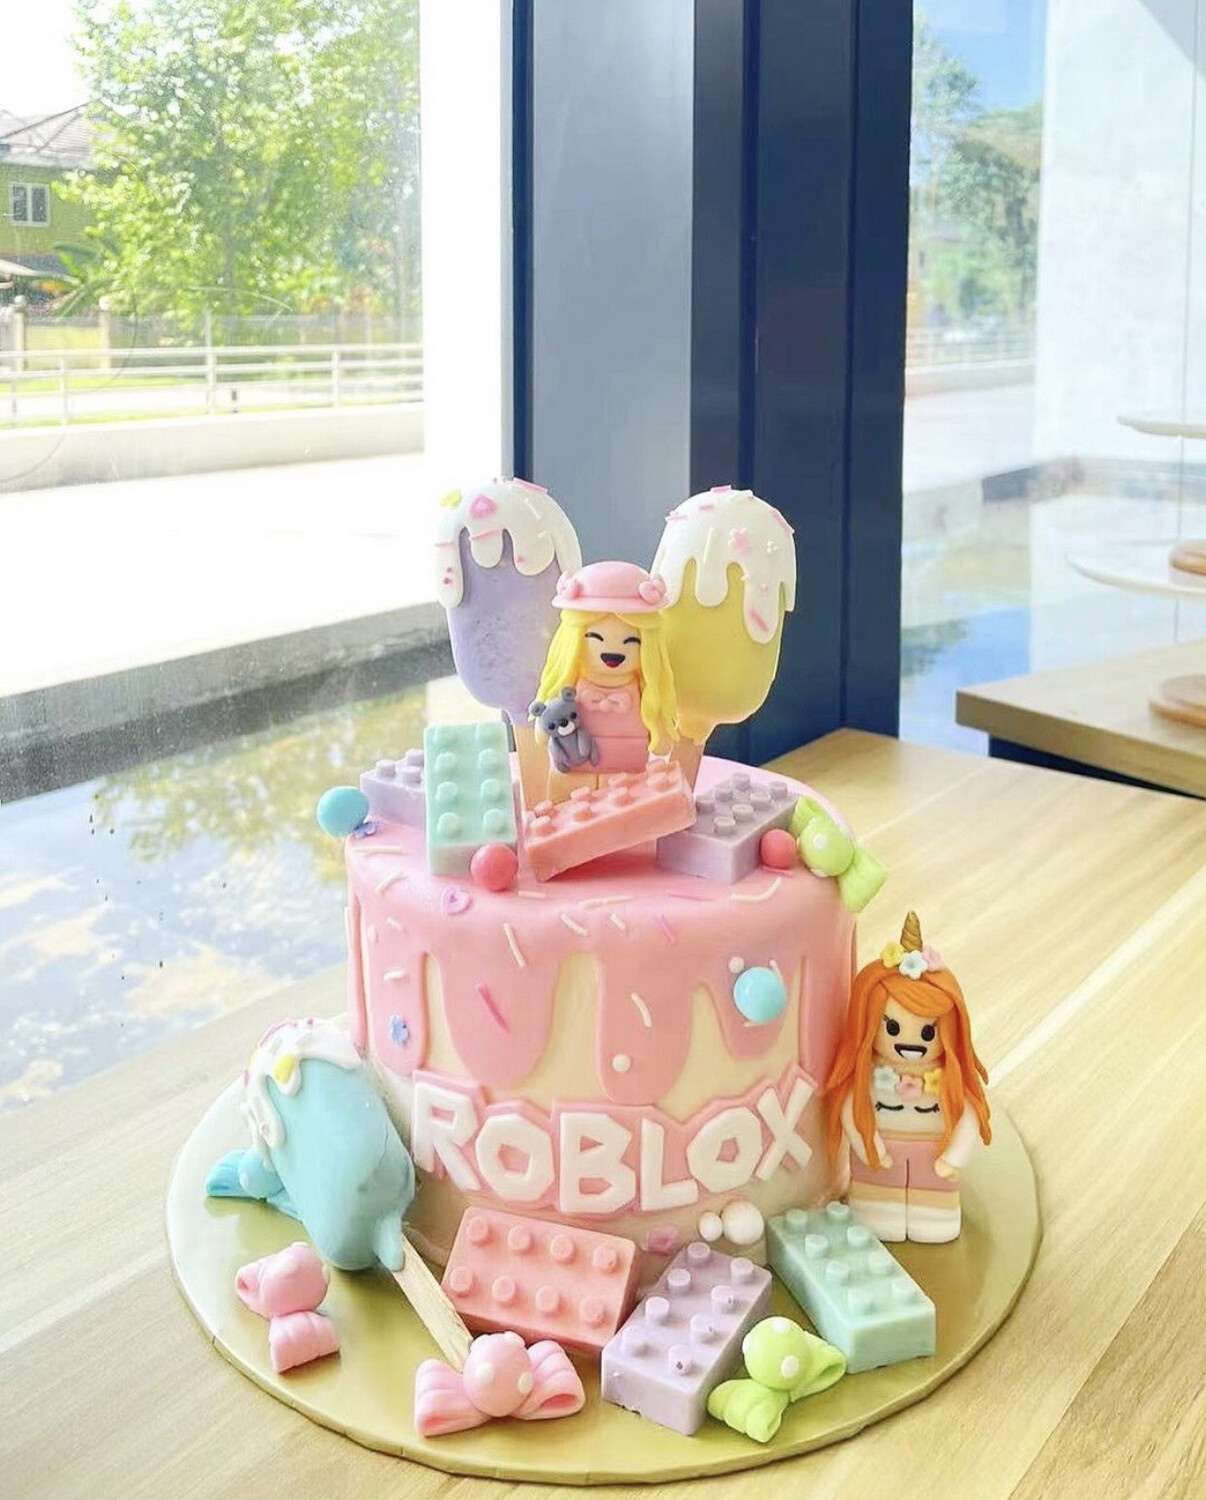 Roblox Cake 2 - Girl